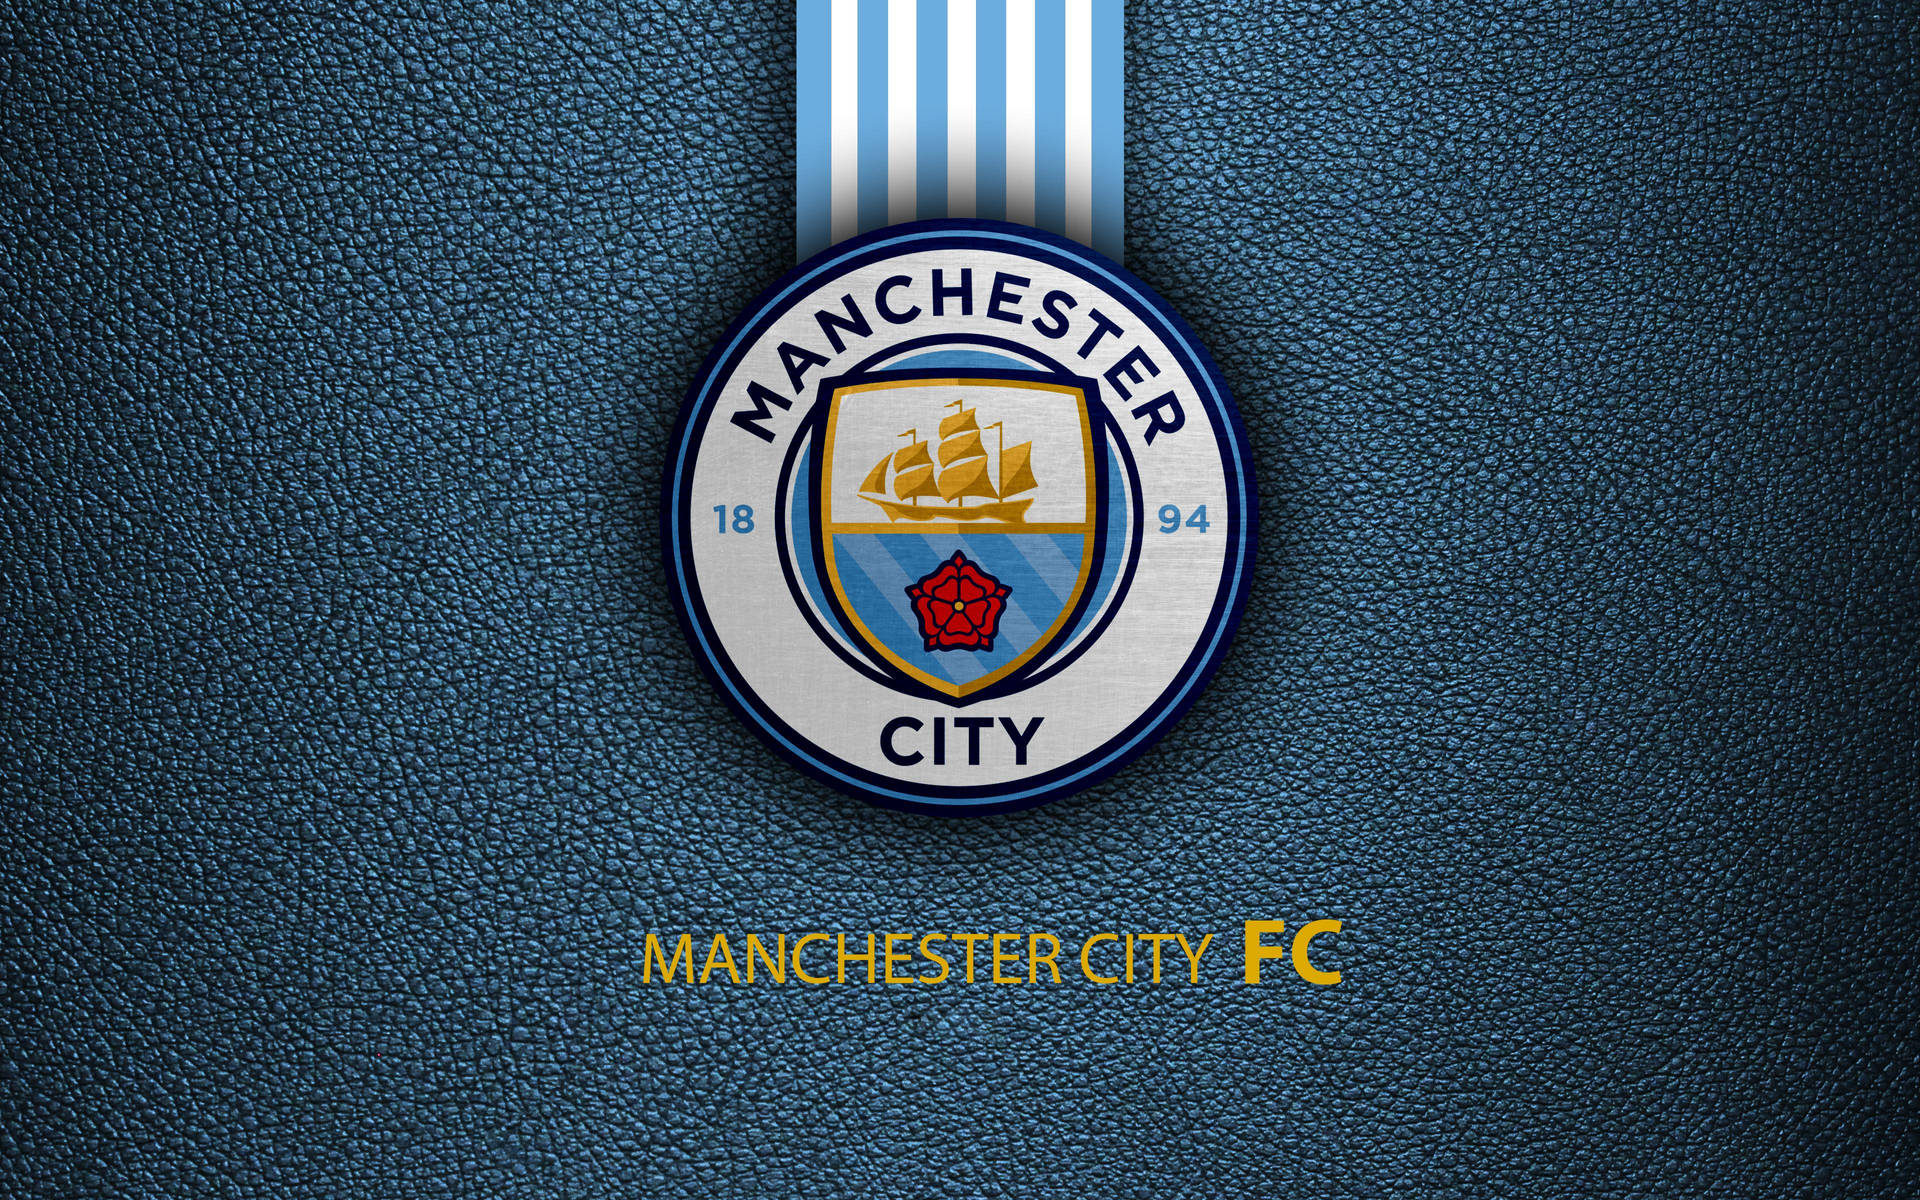 Manchester City 4k Football Club Badge Wallpaper